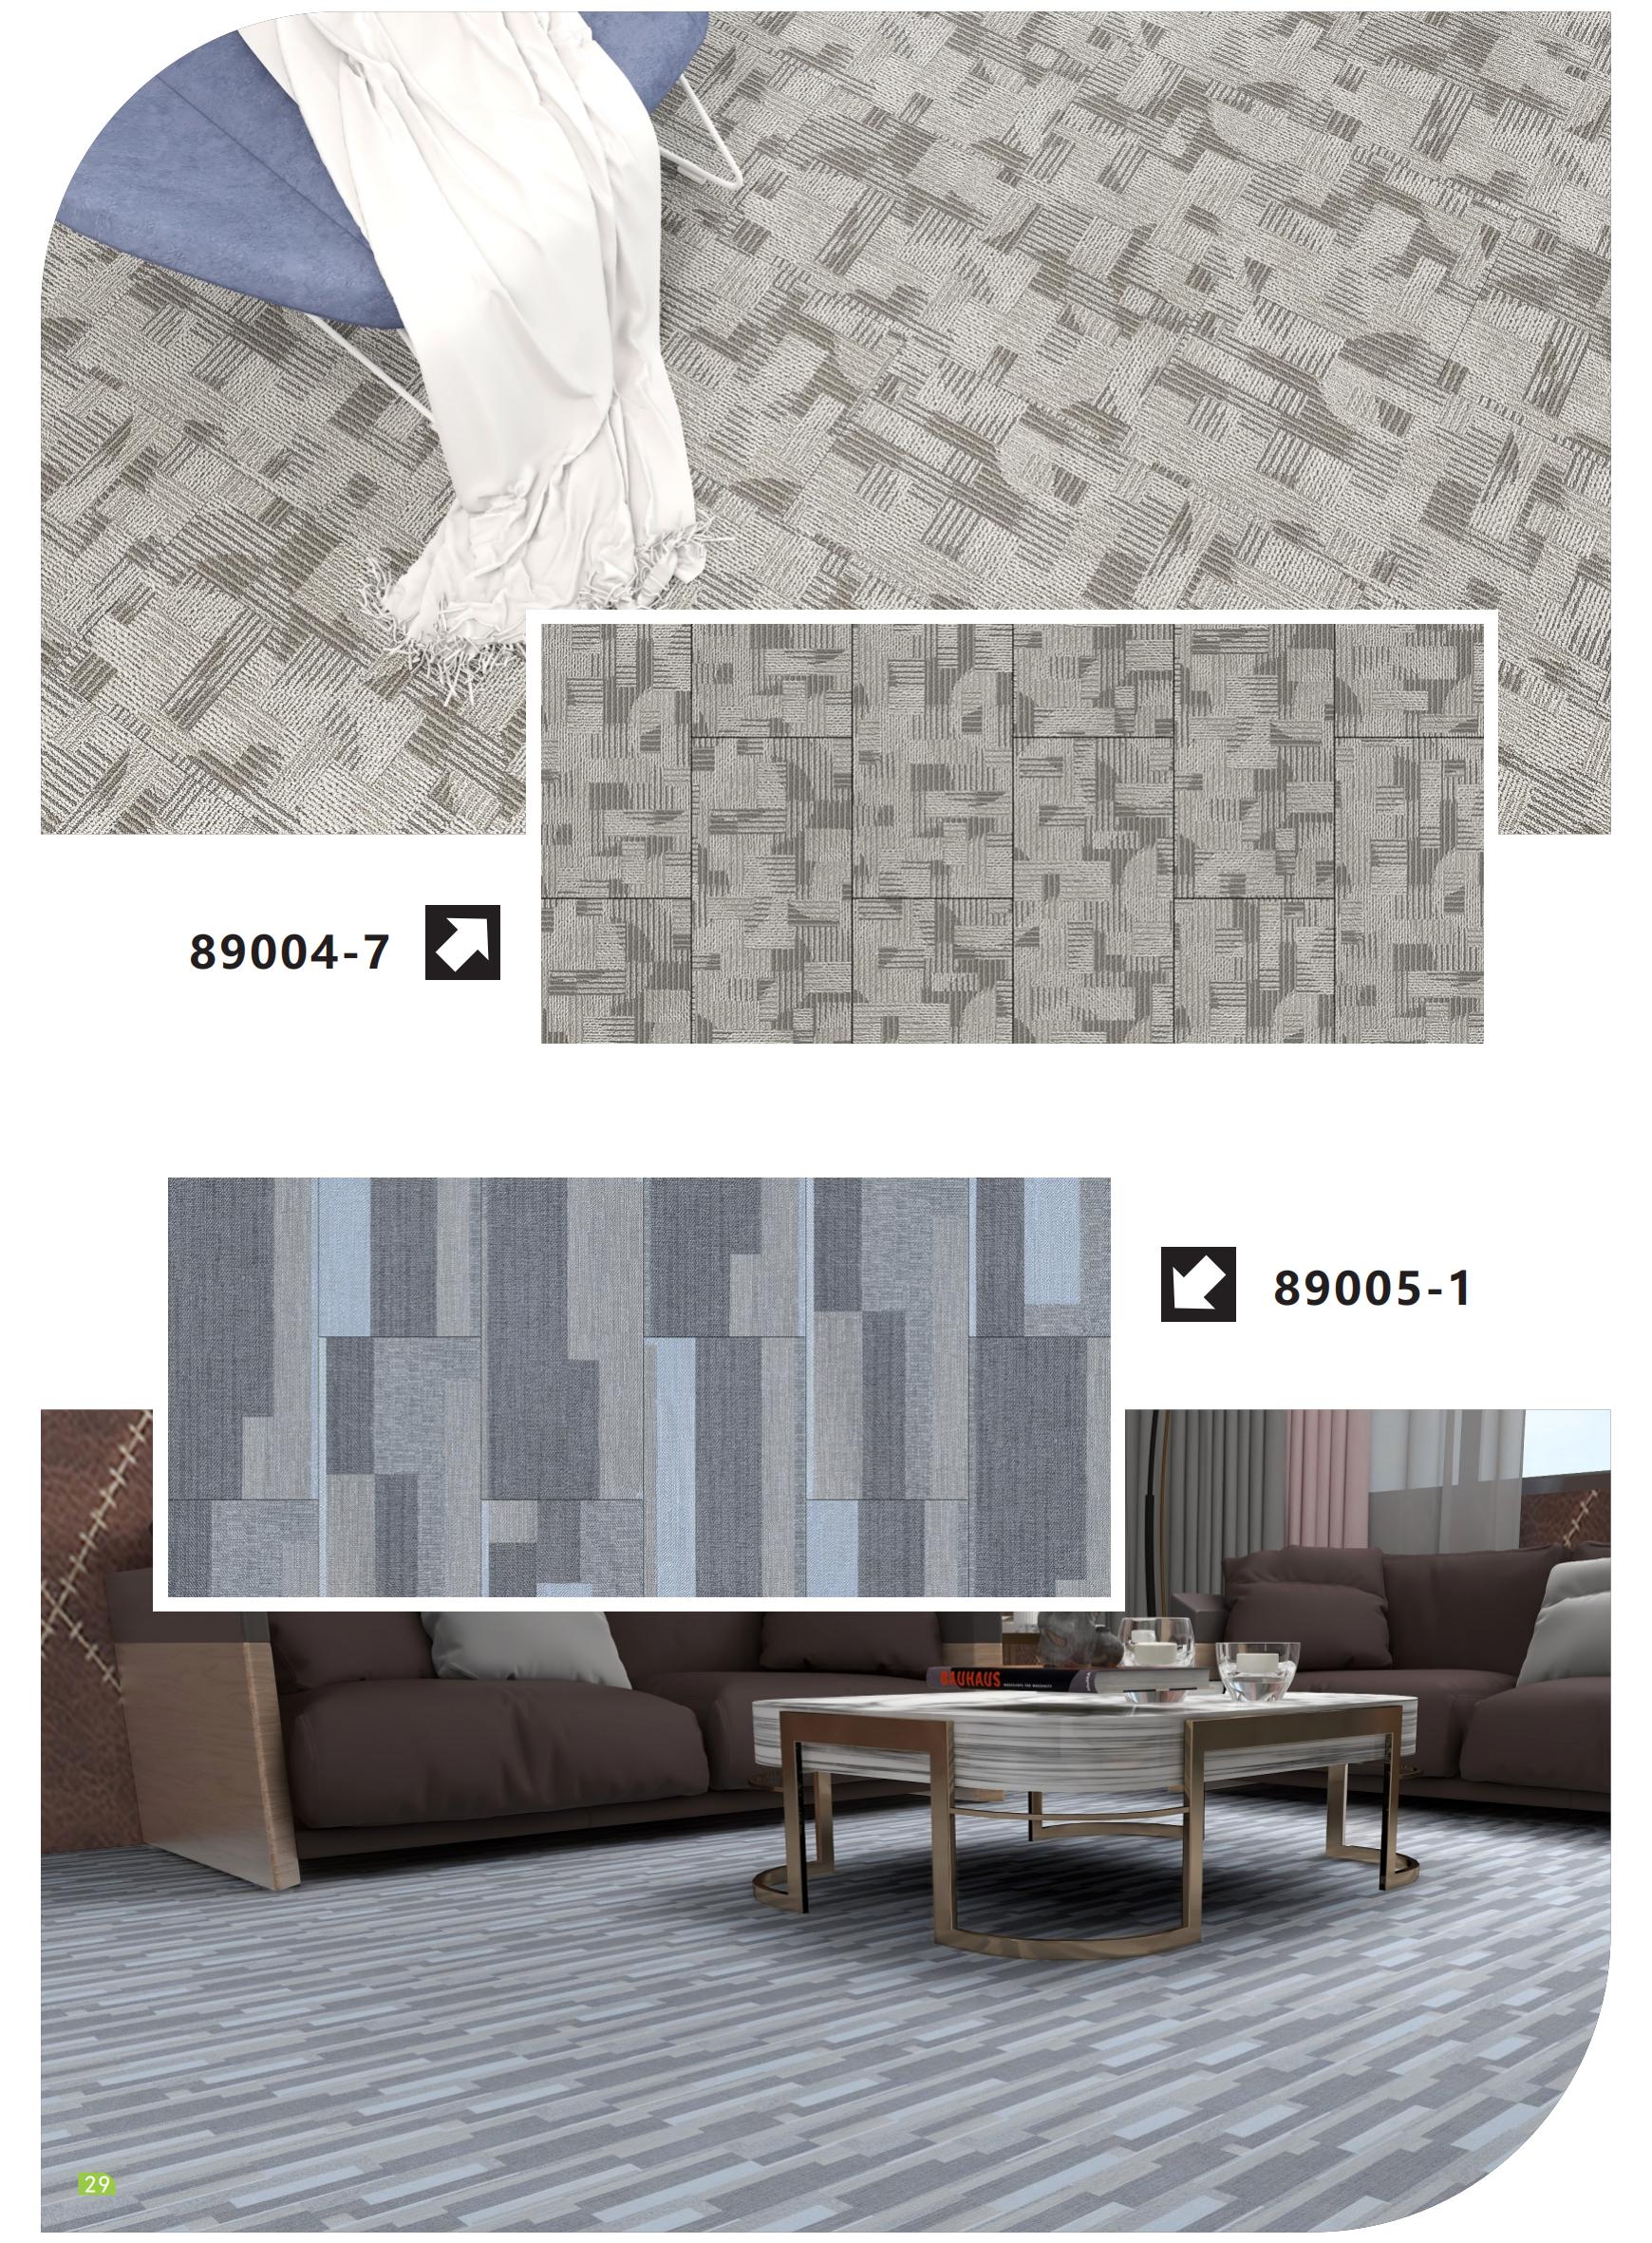 https://www.giqiuvinylfloor.com/luxury-vinyl-tile-lvt-flooring-product/